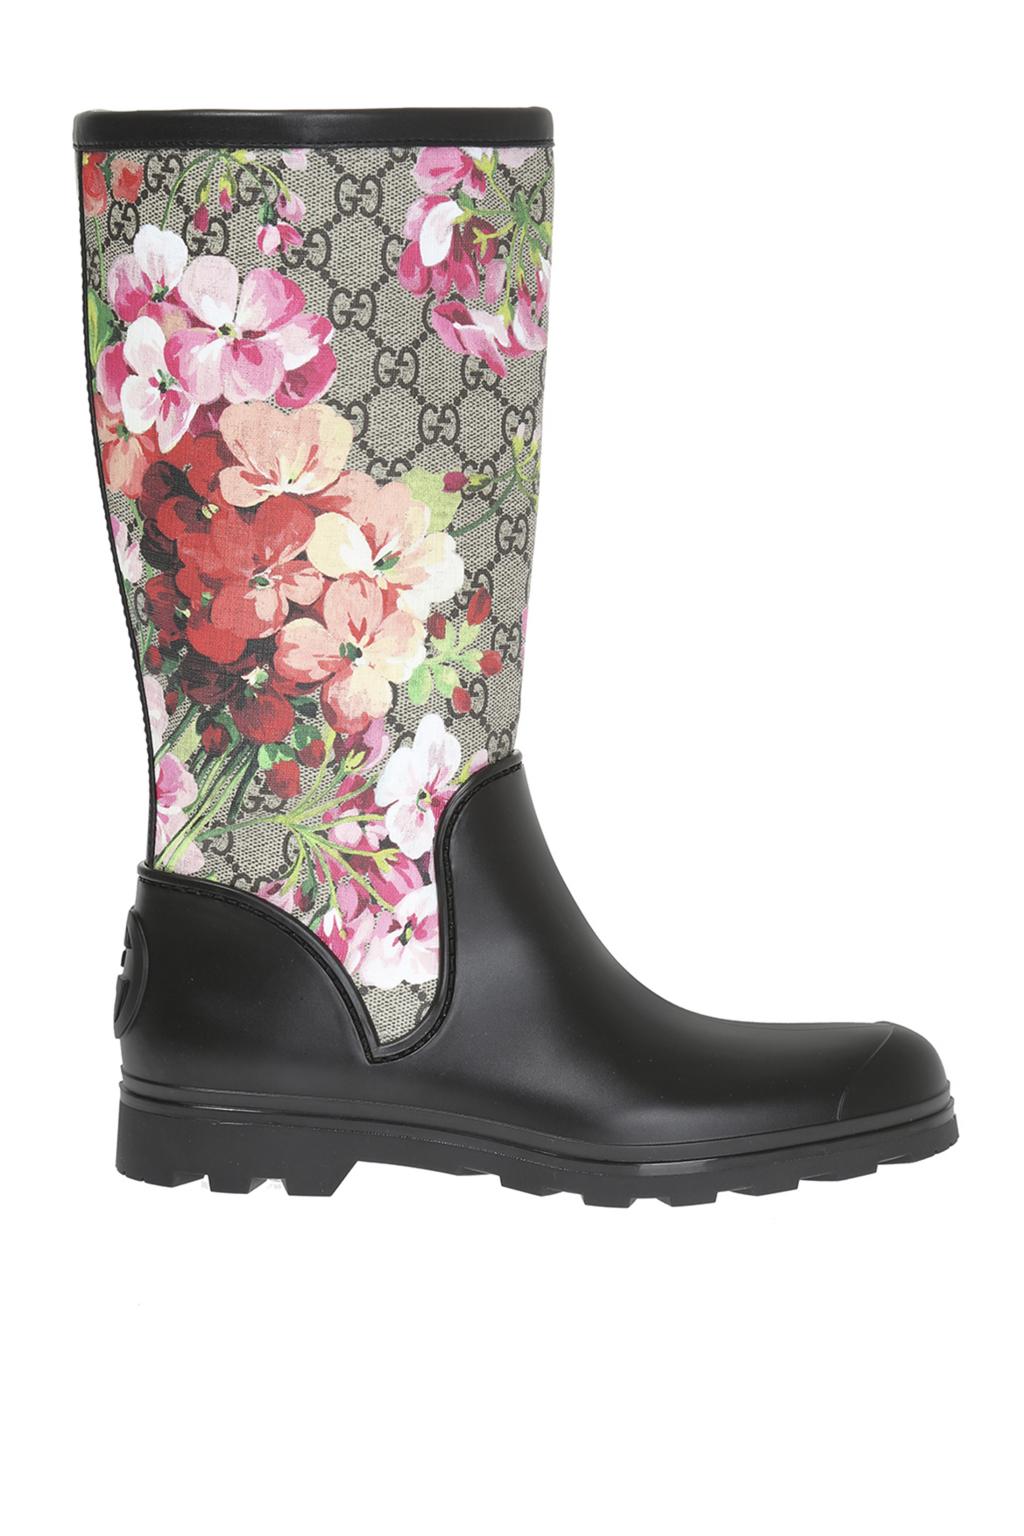 klima Seraph Detektiv Gucci Bloom Rain Boots U.K., SAVE 35% - motorhomevoyager.co.uk